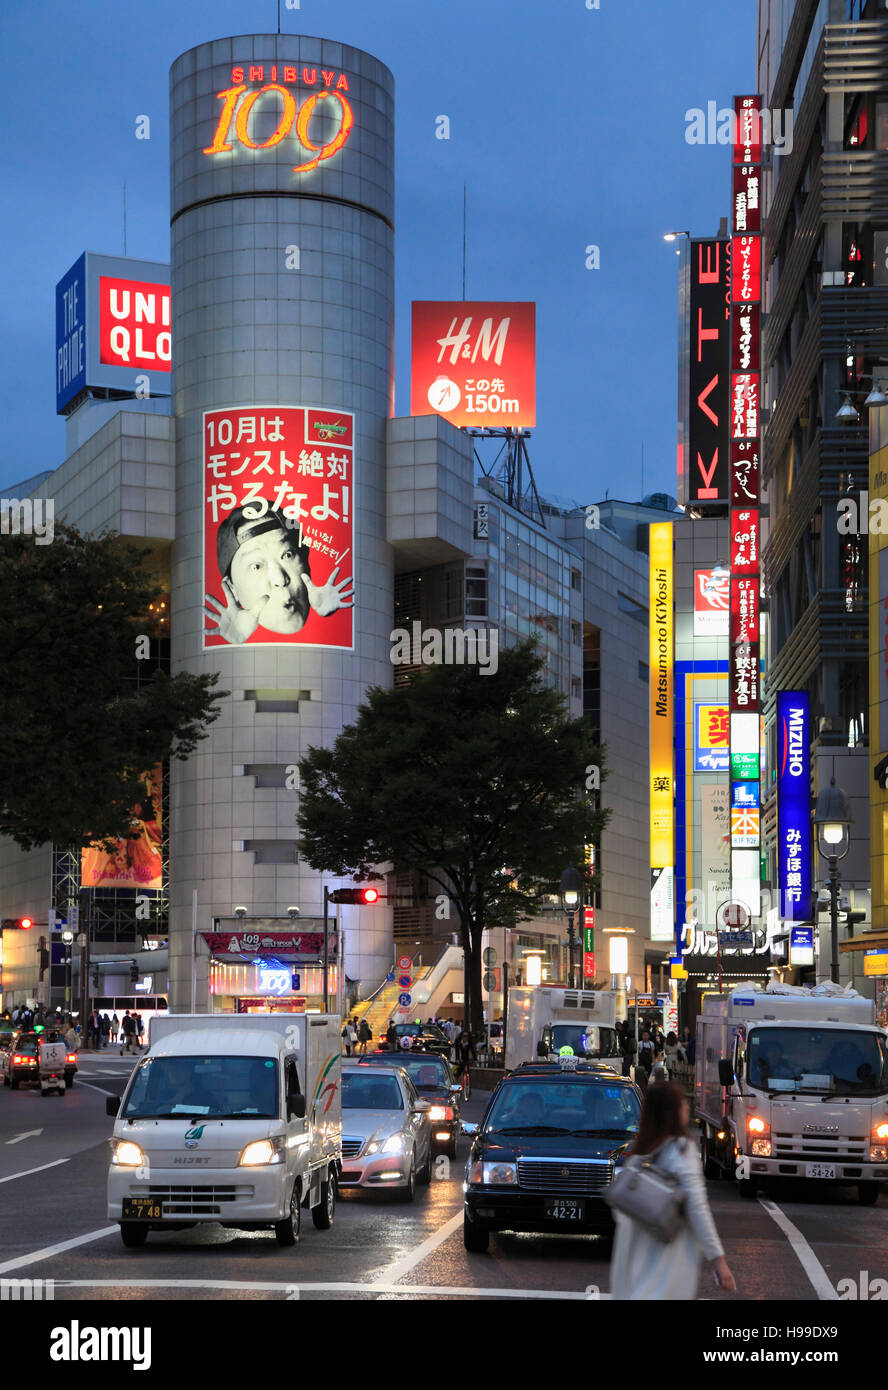 Shibuya 109 people hi-res stock photography and images - Alamy